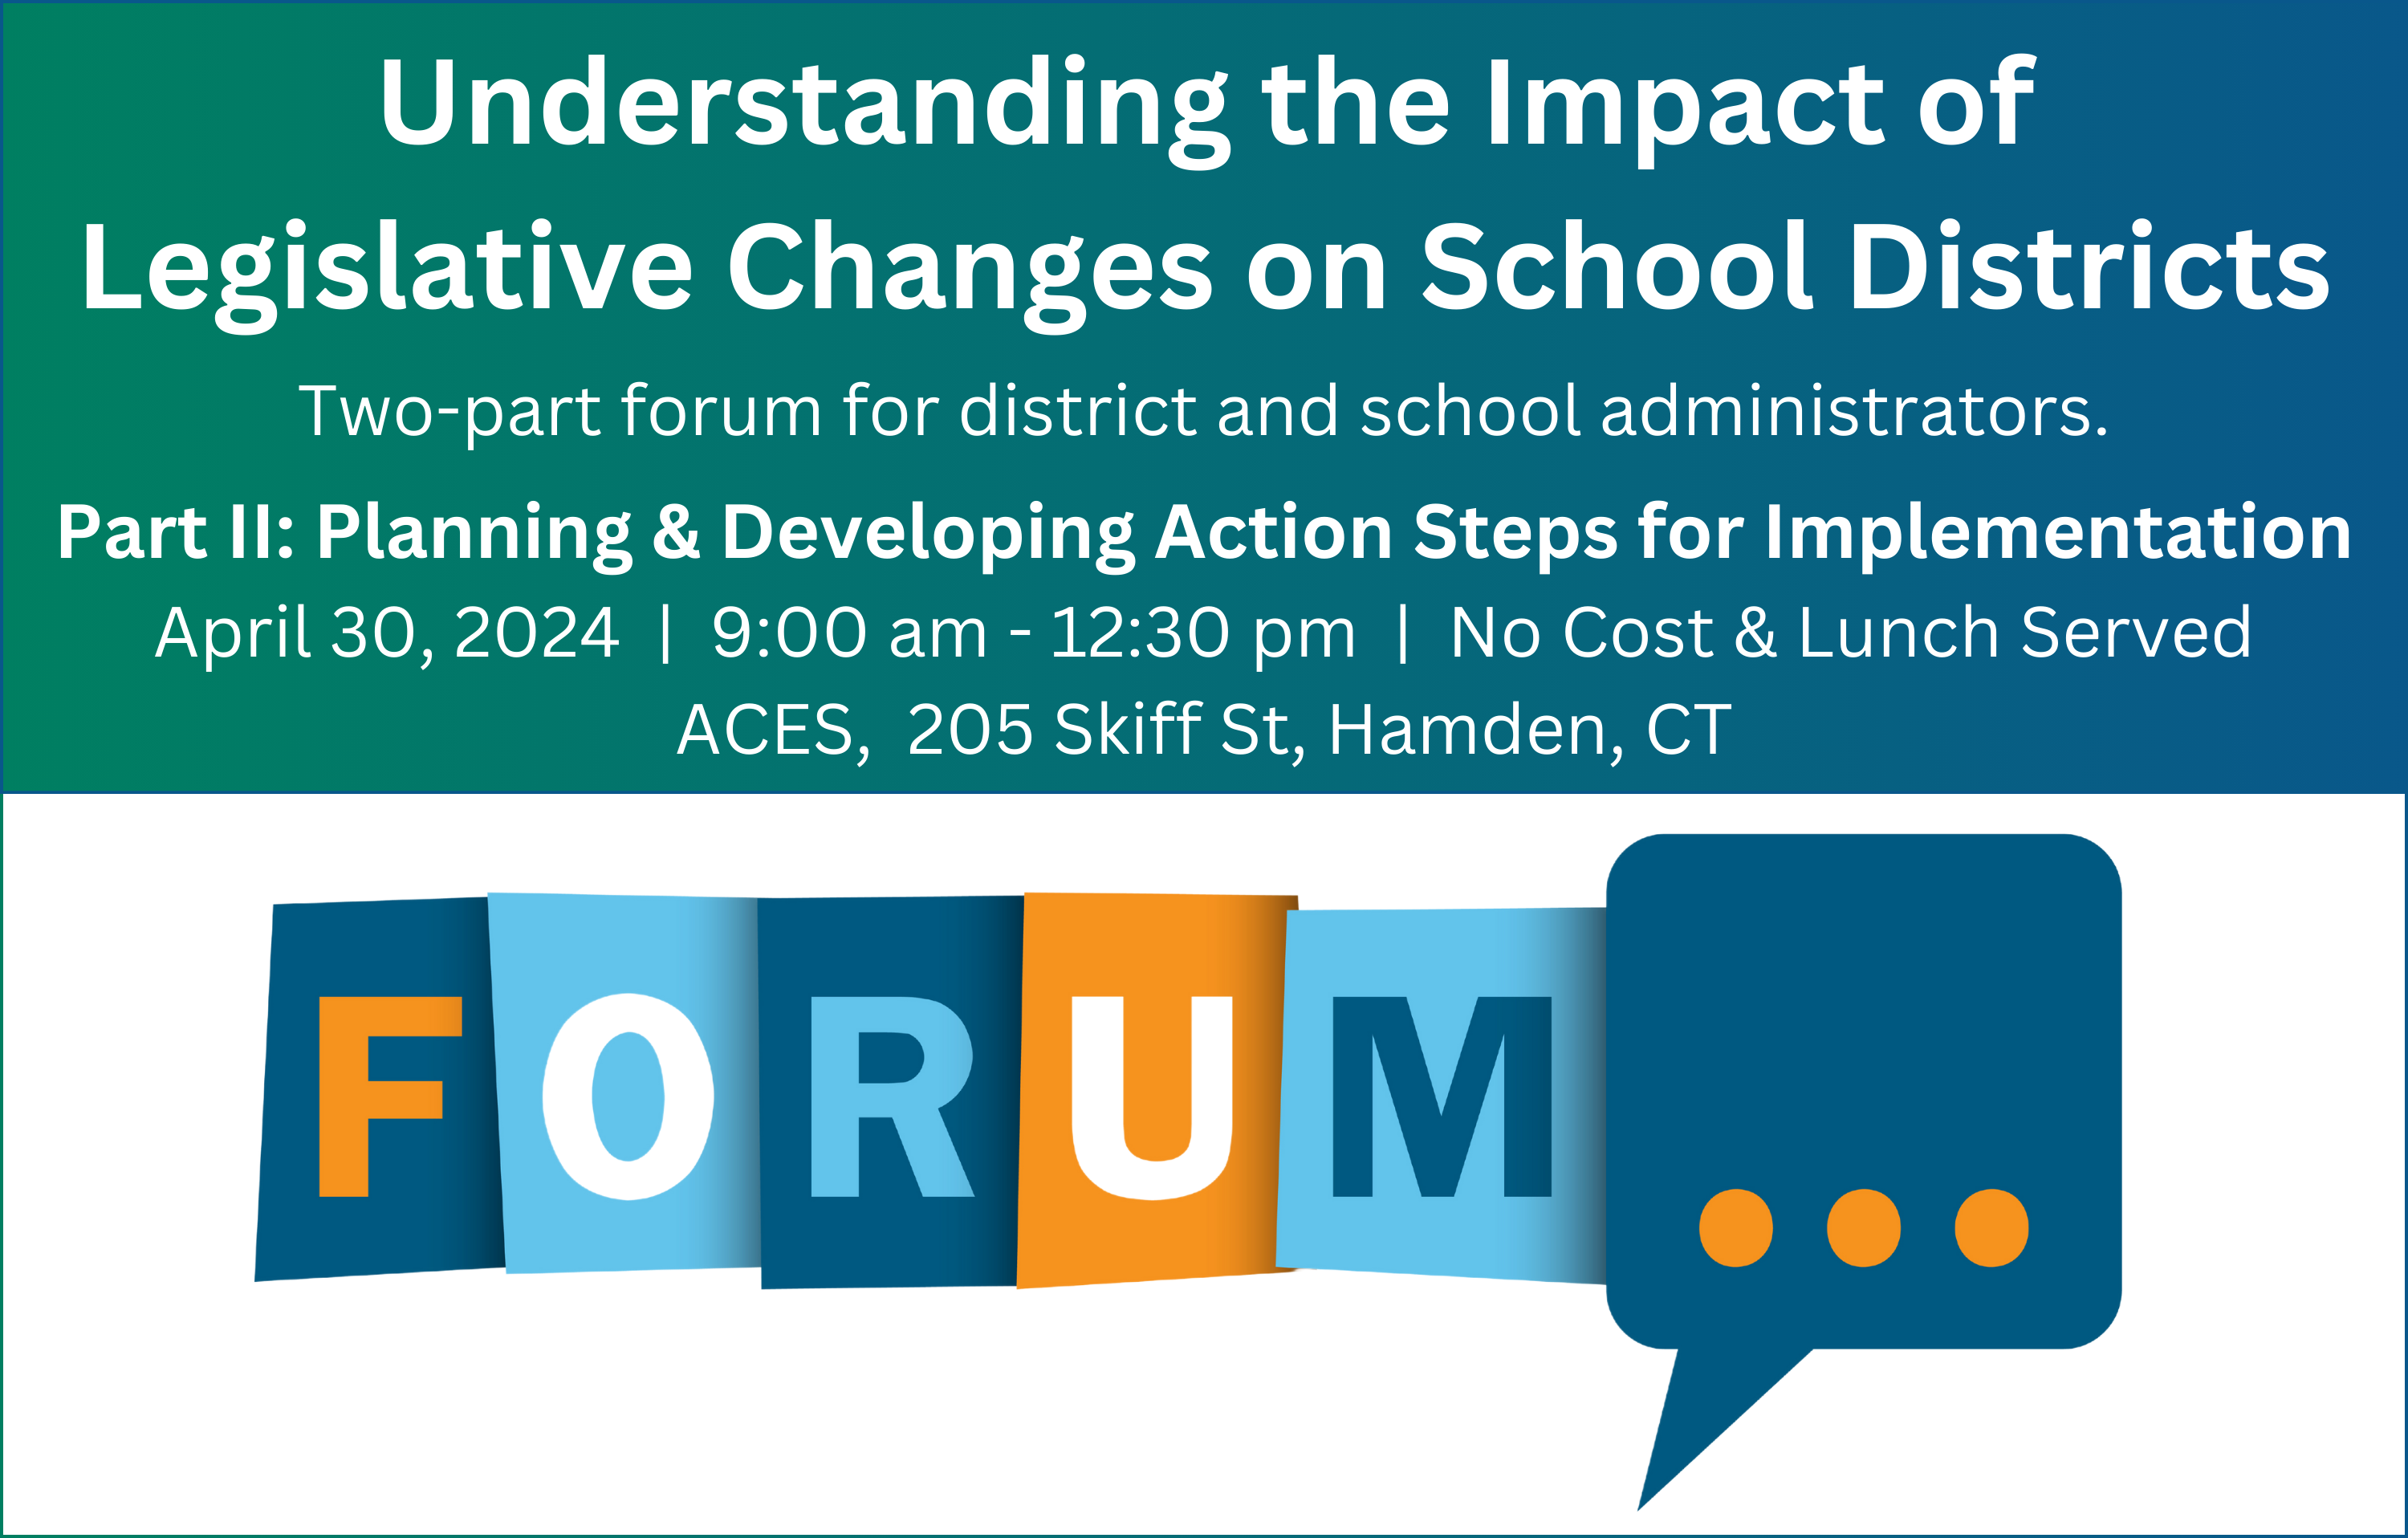 Register for Understanding the Impact of Legislative Changes on School Districts: Forum Part II